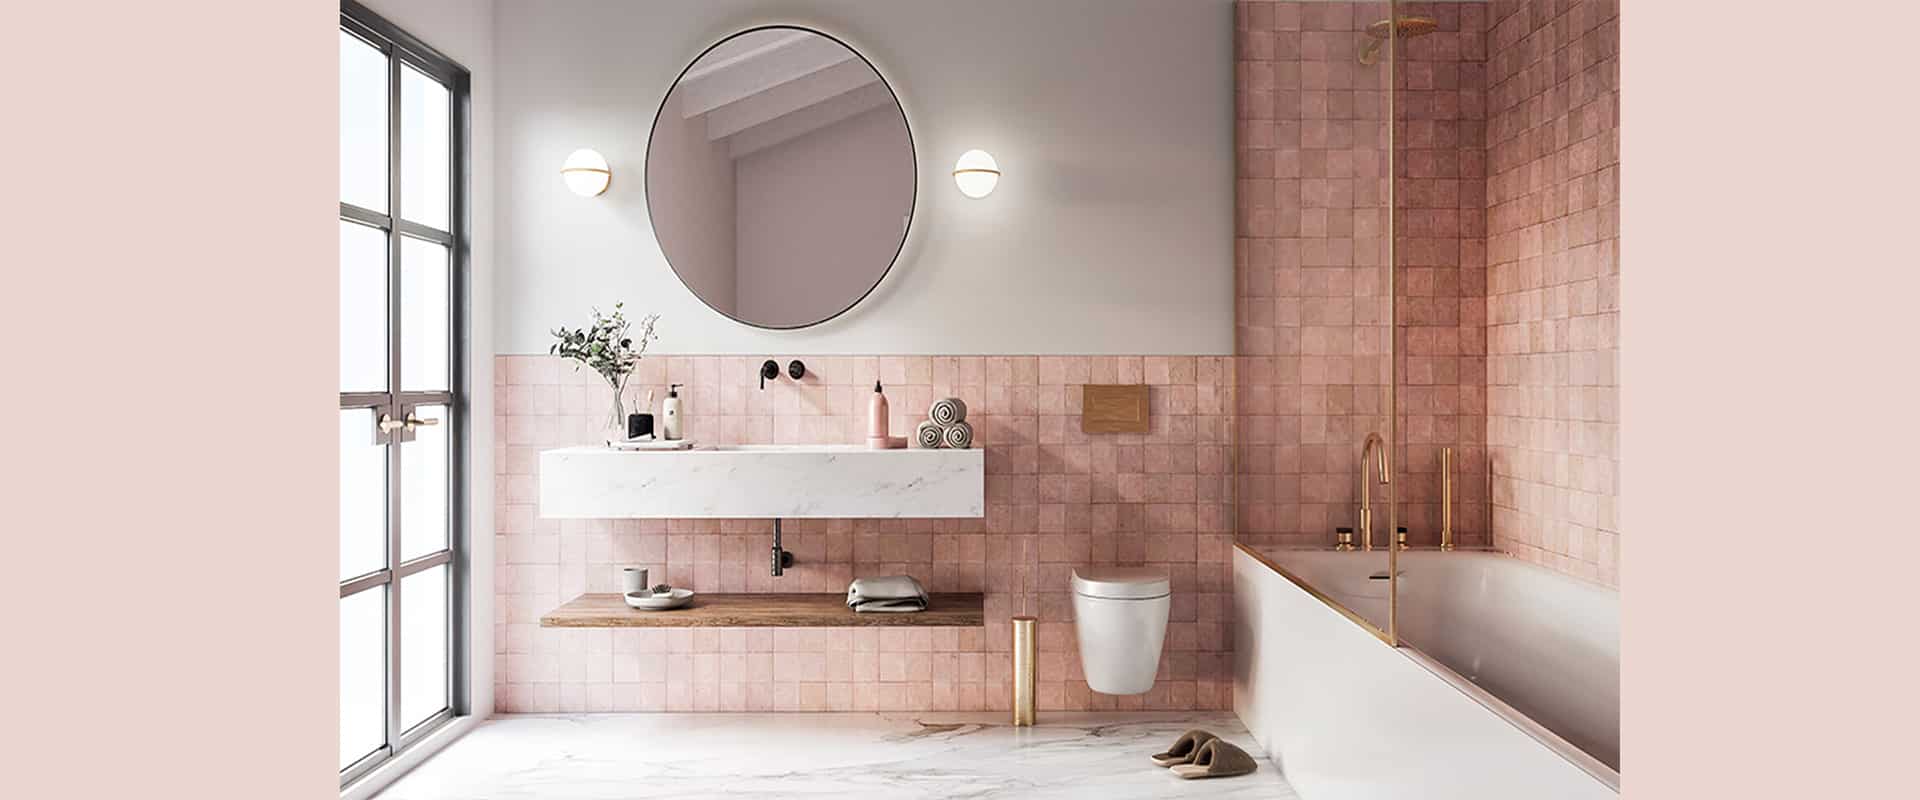 Glamorous designer bathrooms